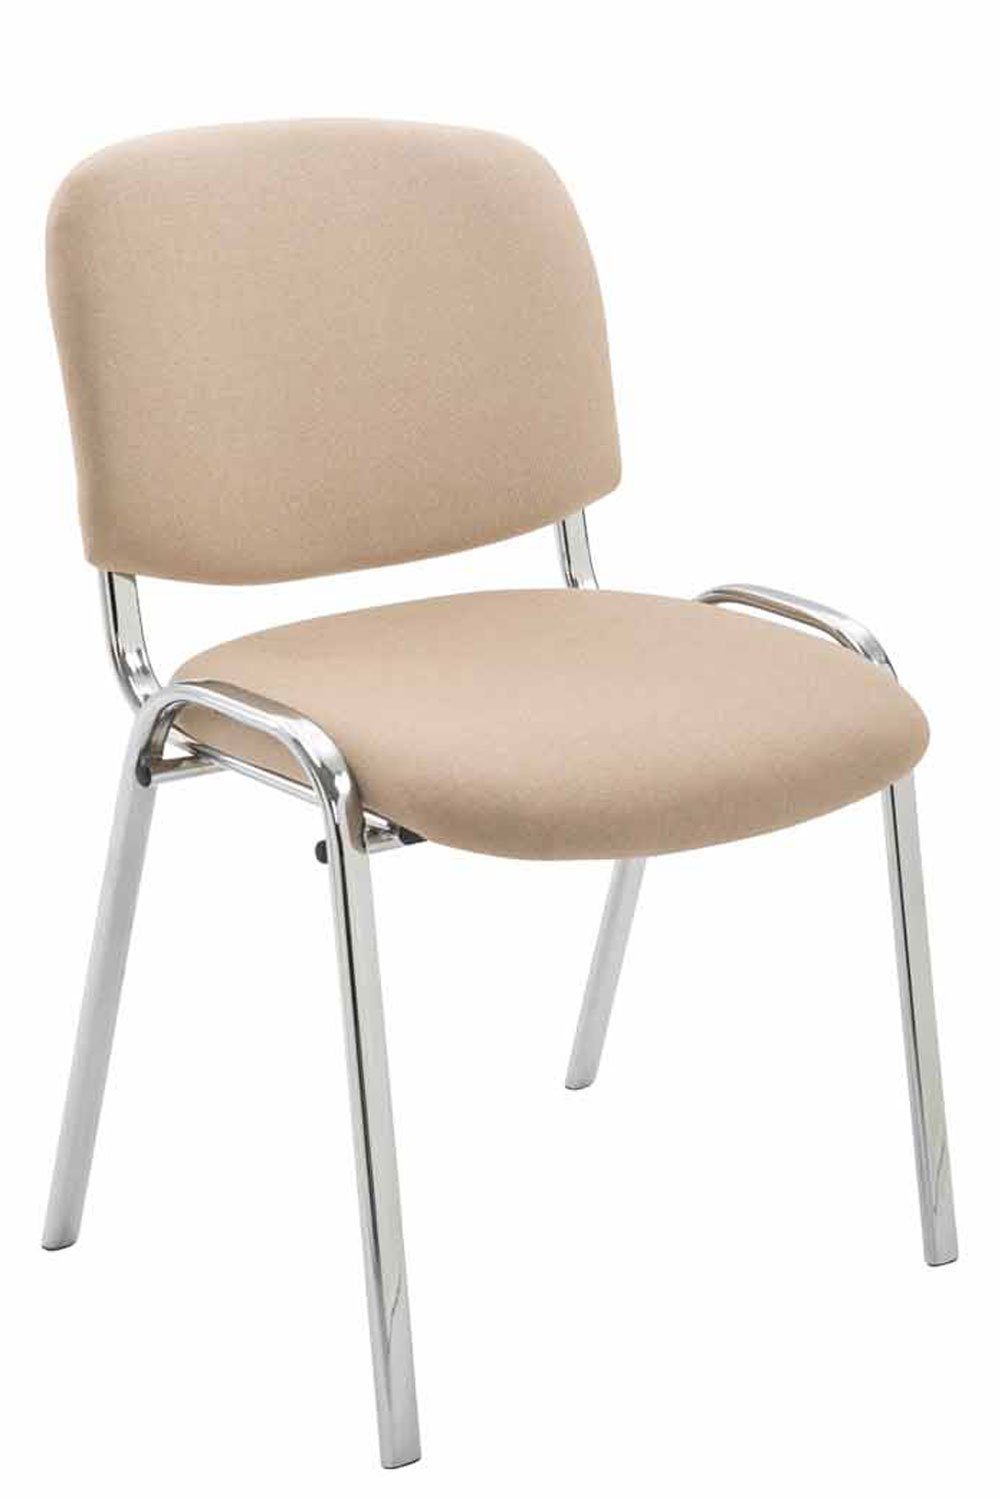 TPFLiving Besucherstuhl Keen mit hochwertiger Polsterung - Konferenzstuhl (Besprechungsstuhl - Warteraumstuhl - Messestuhl), Gestell: Metall chrom - Sitzfläche: Stoff creme